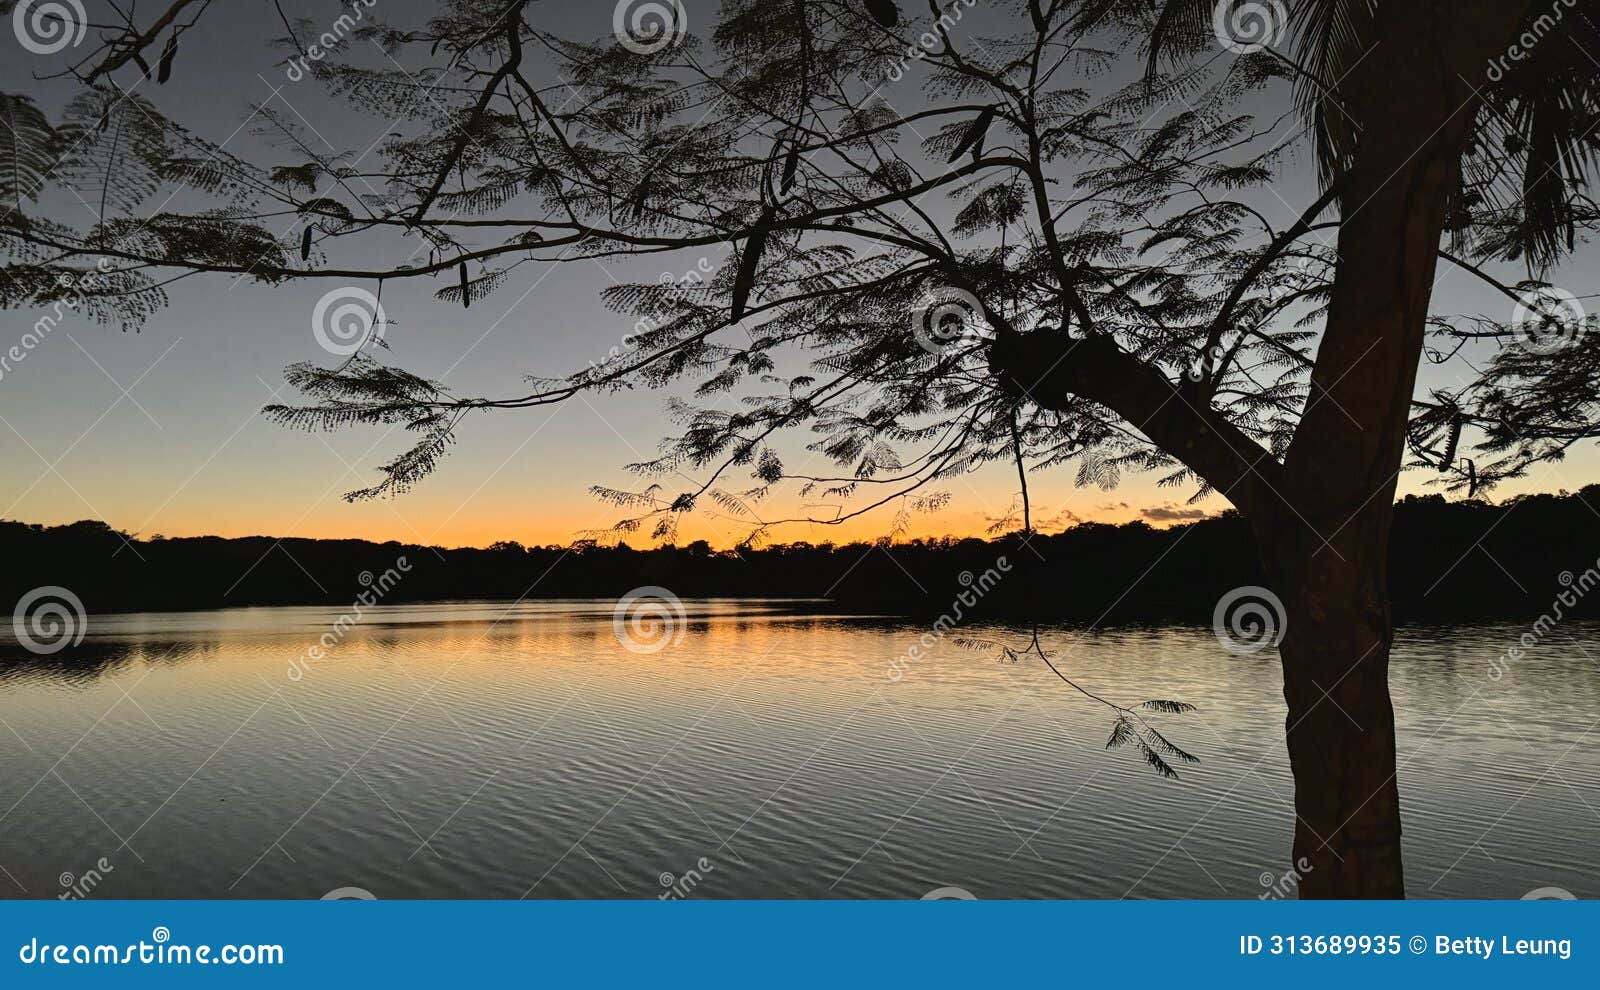 golden sunset at laguna petenchel in peten, guatemala